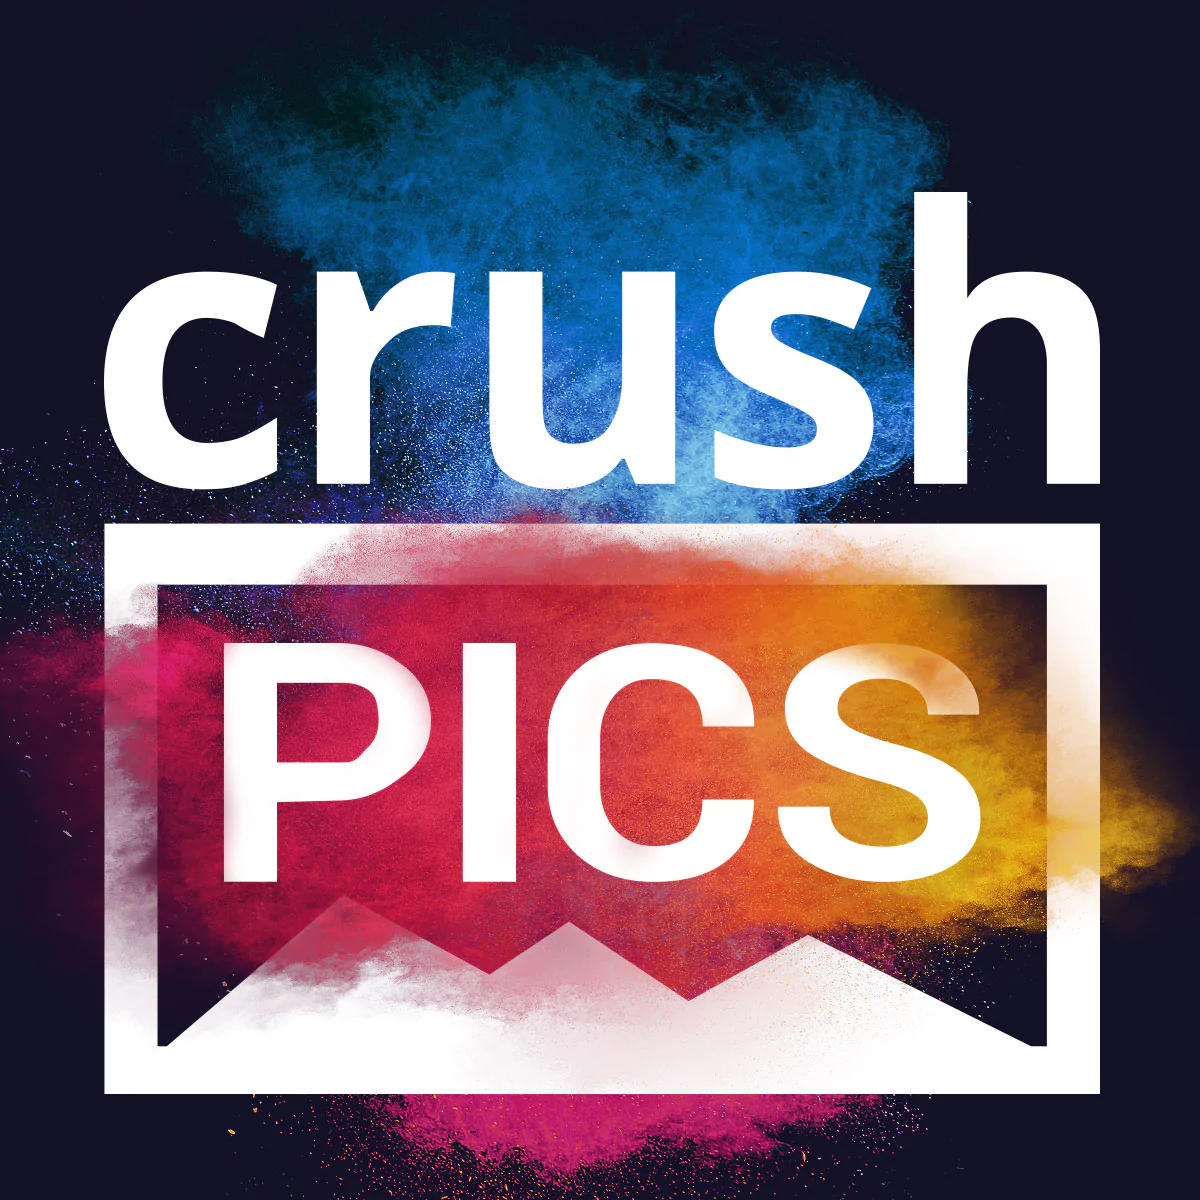 Crush: Speed & Image Optimizer